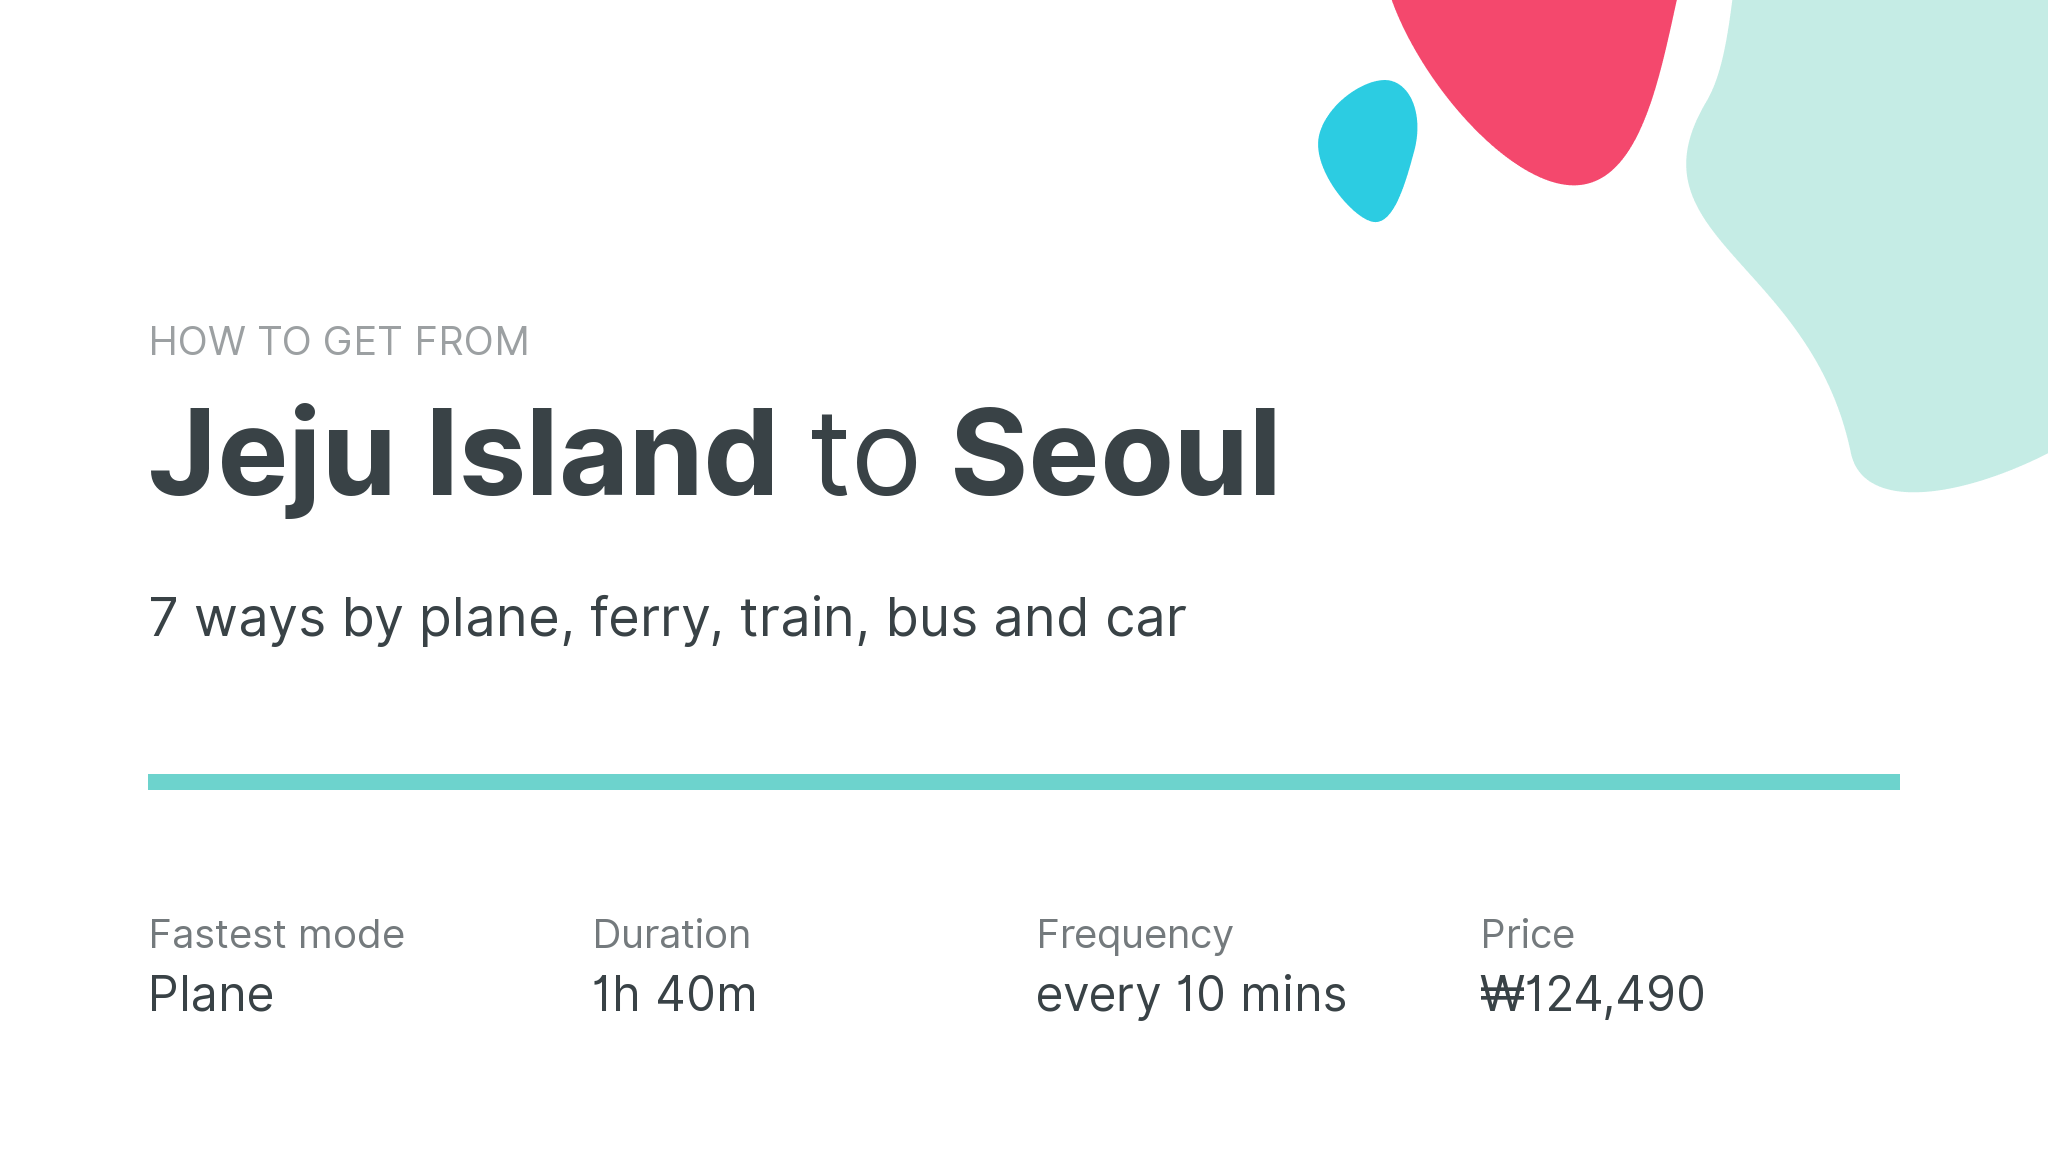 How do I get from Jeju Island to Seoul